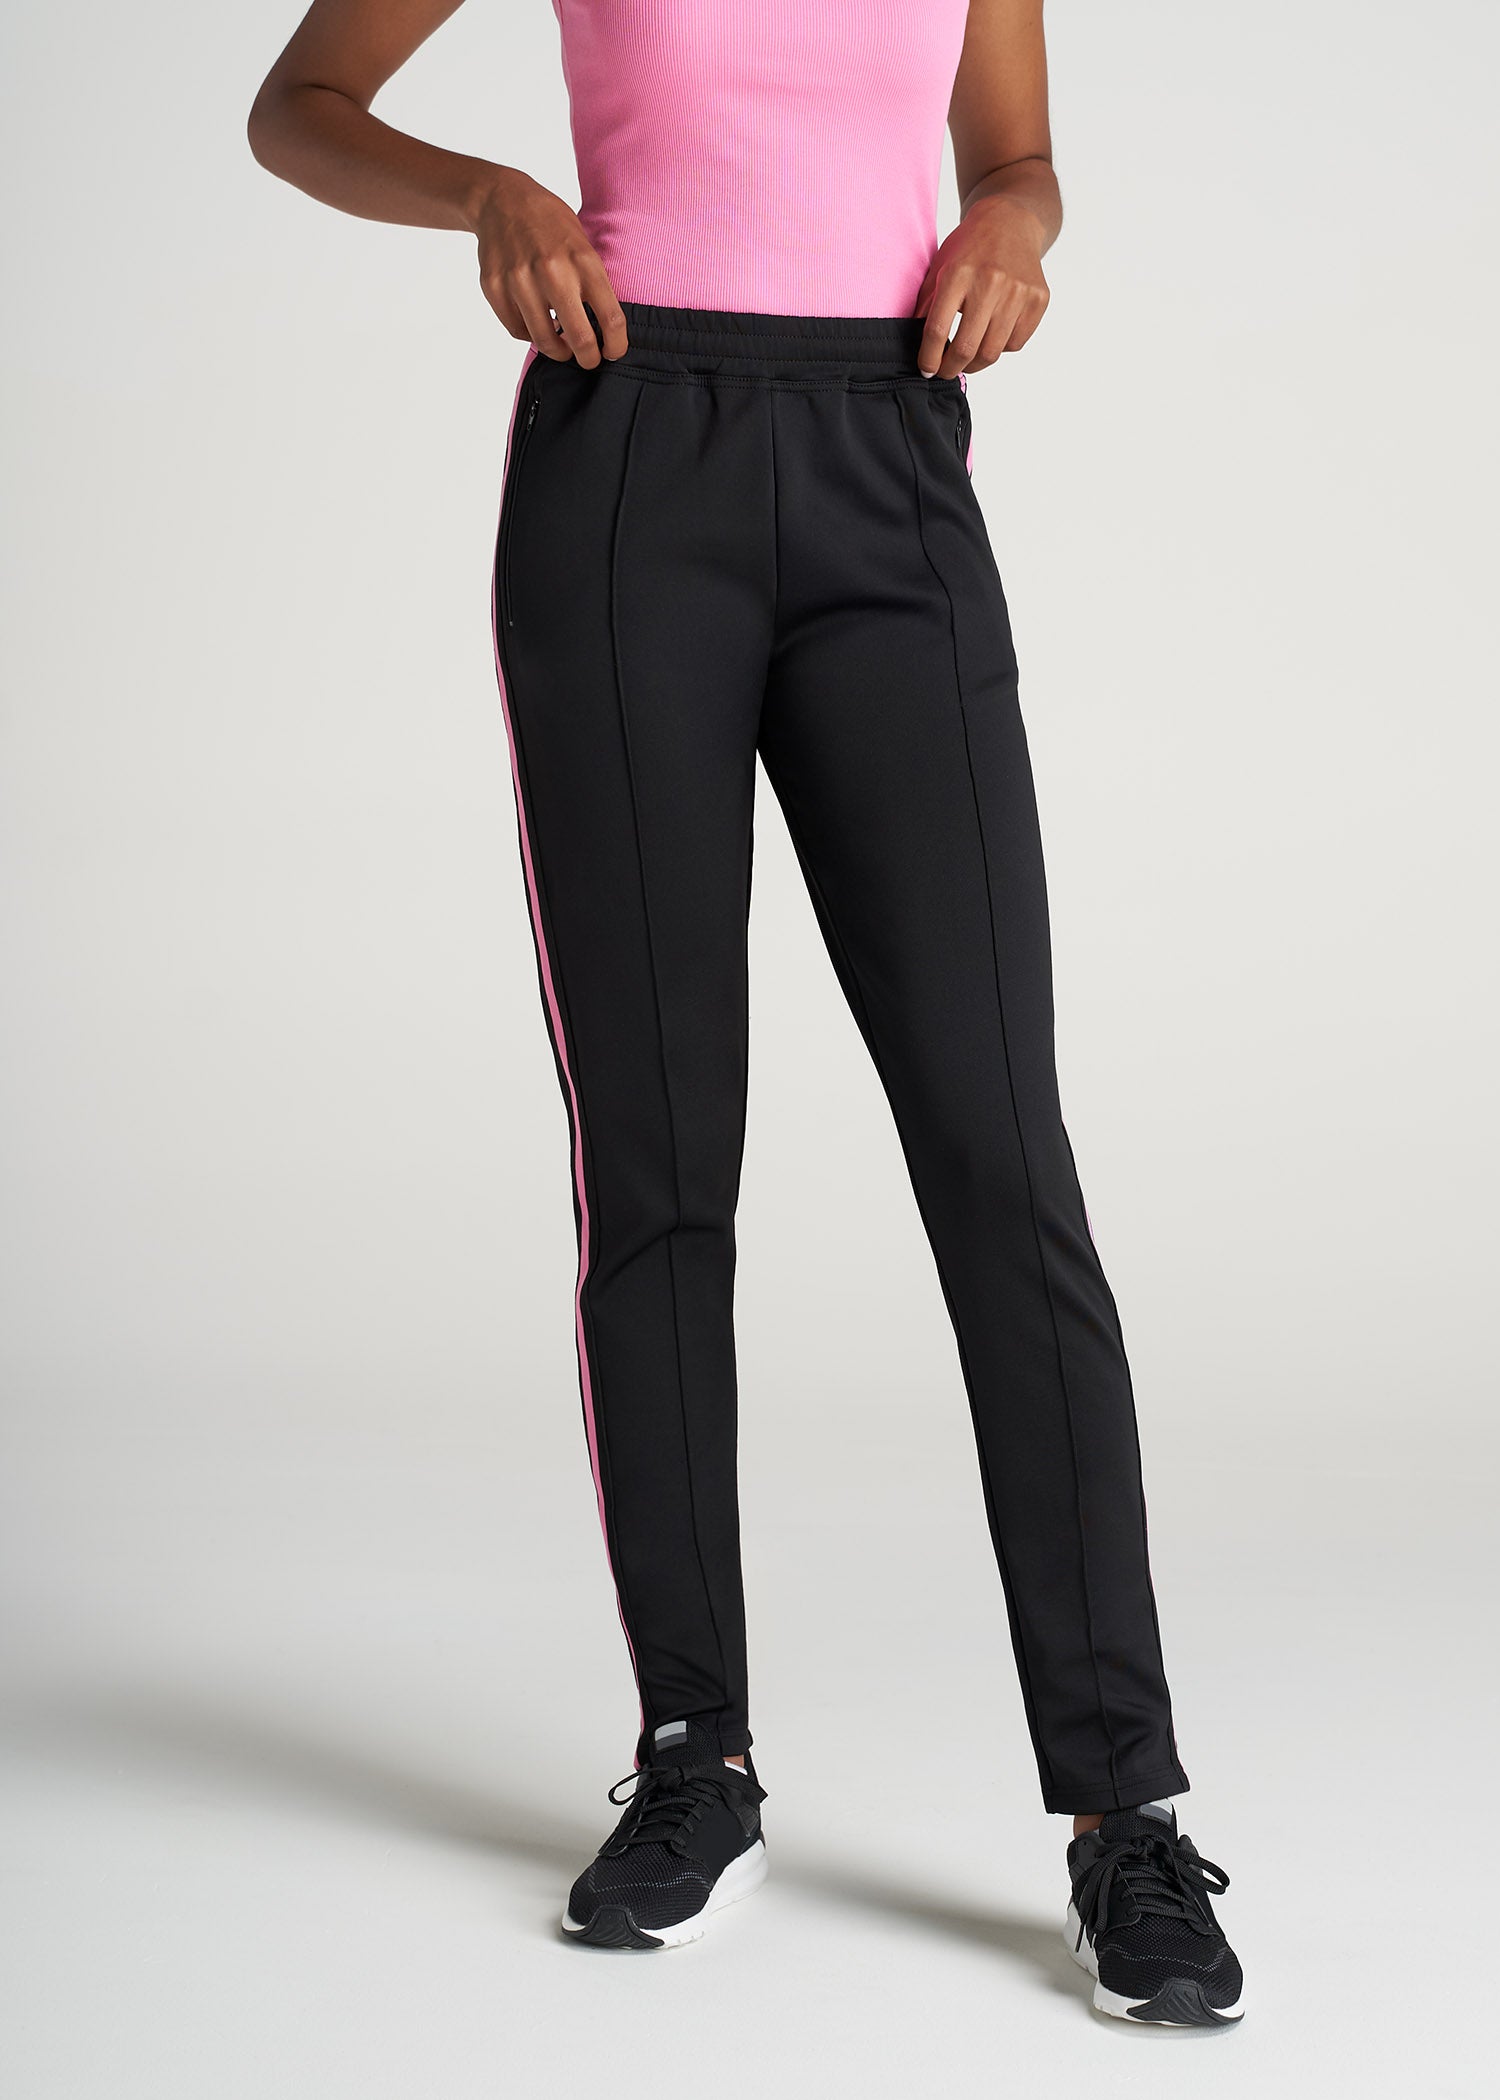 Black Pink Slim Fit Joggers - Yogue Activewear